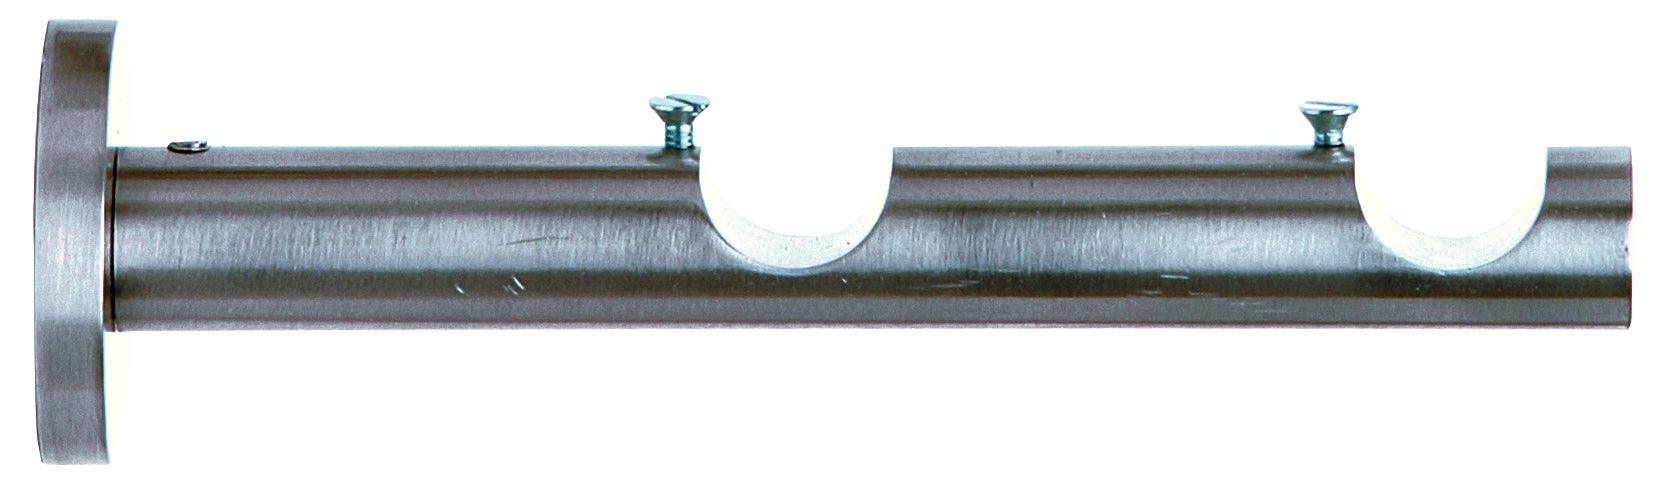 Double Cylinder Bracket 30/30 - Alan Richard Textiles, LTD Zabala 1-3/16" Acero Stainless Steel